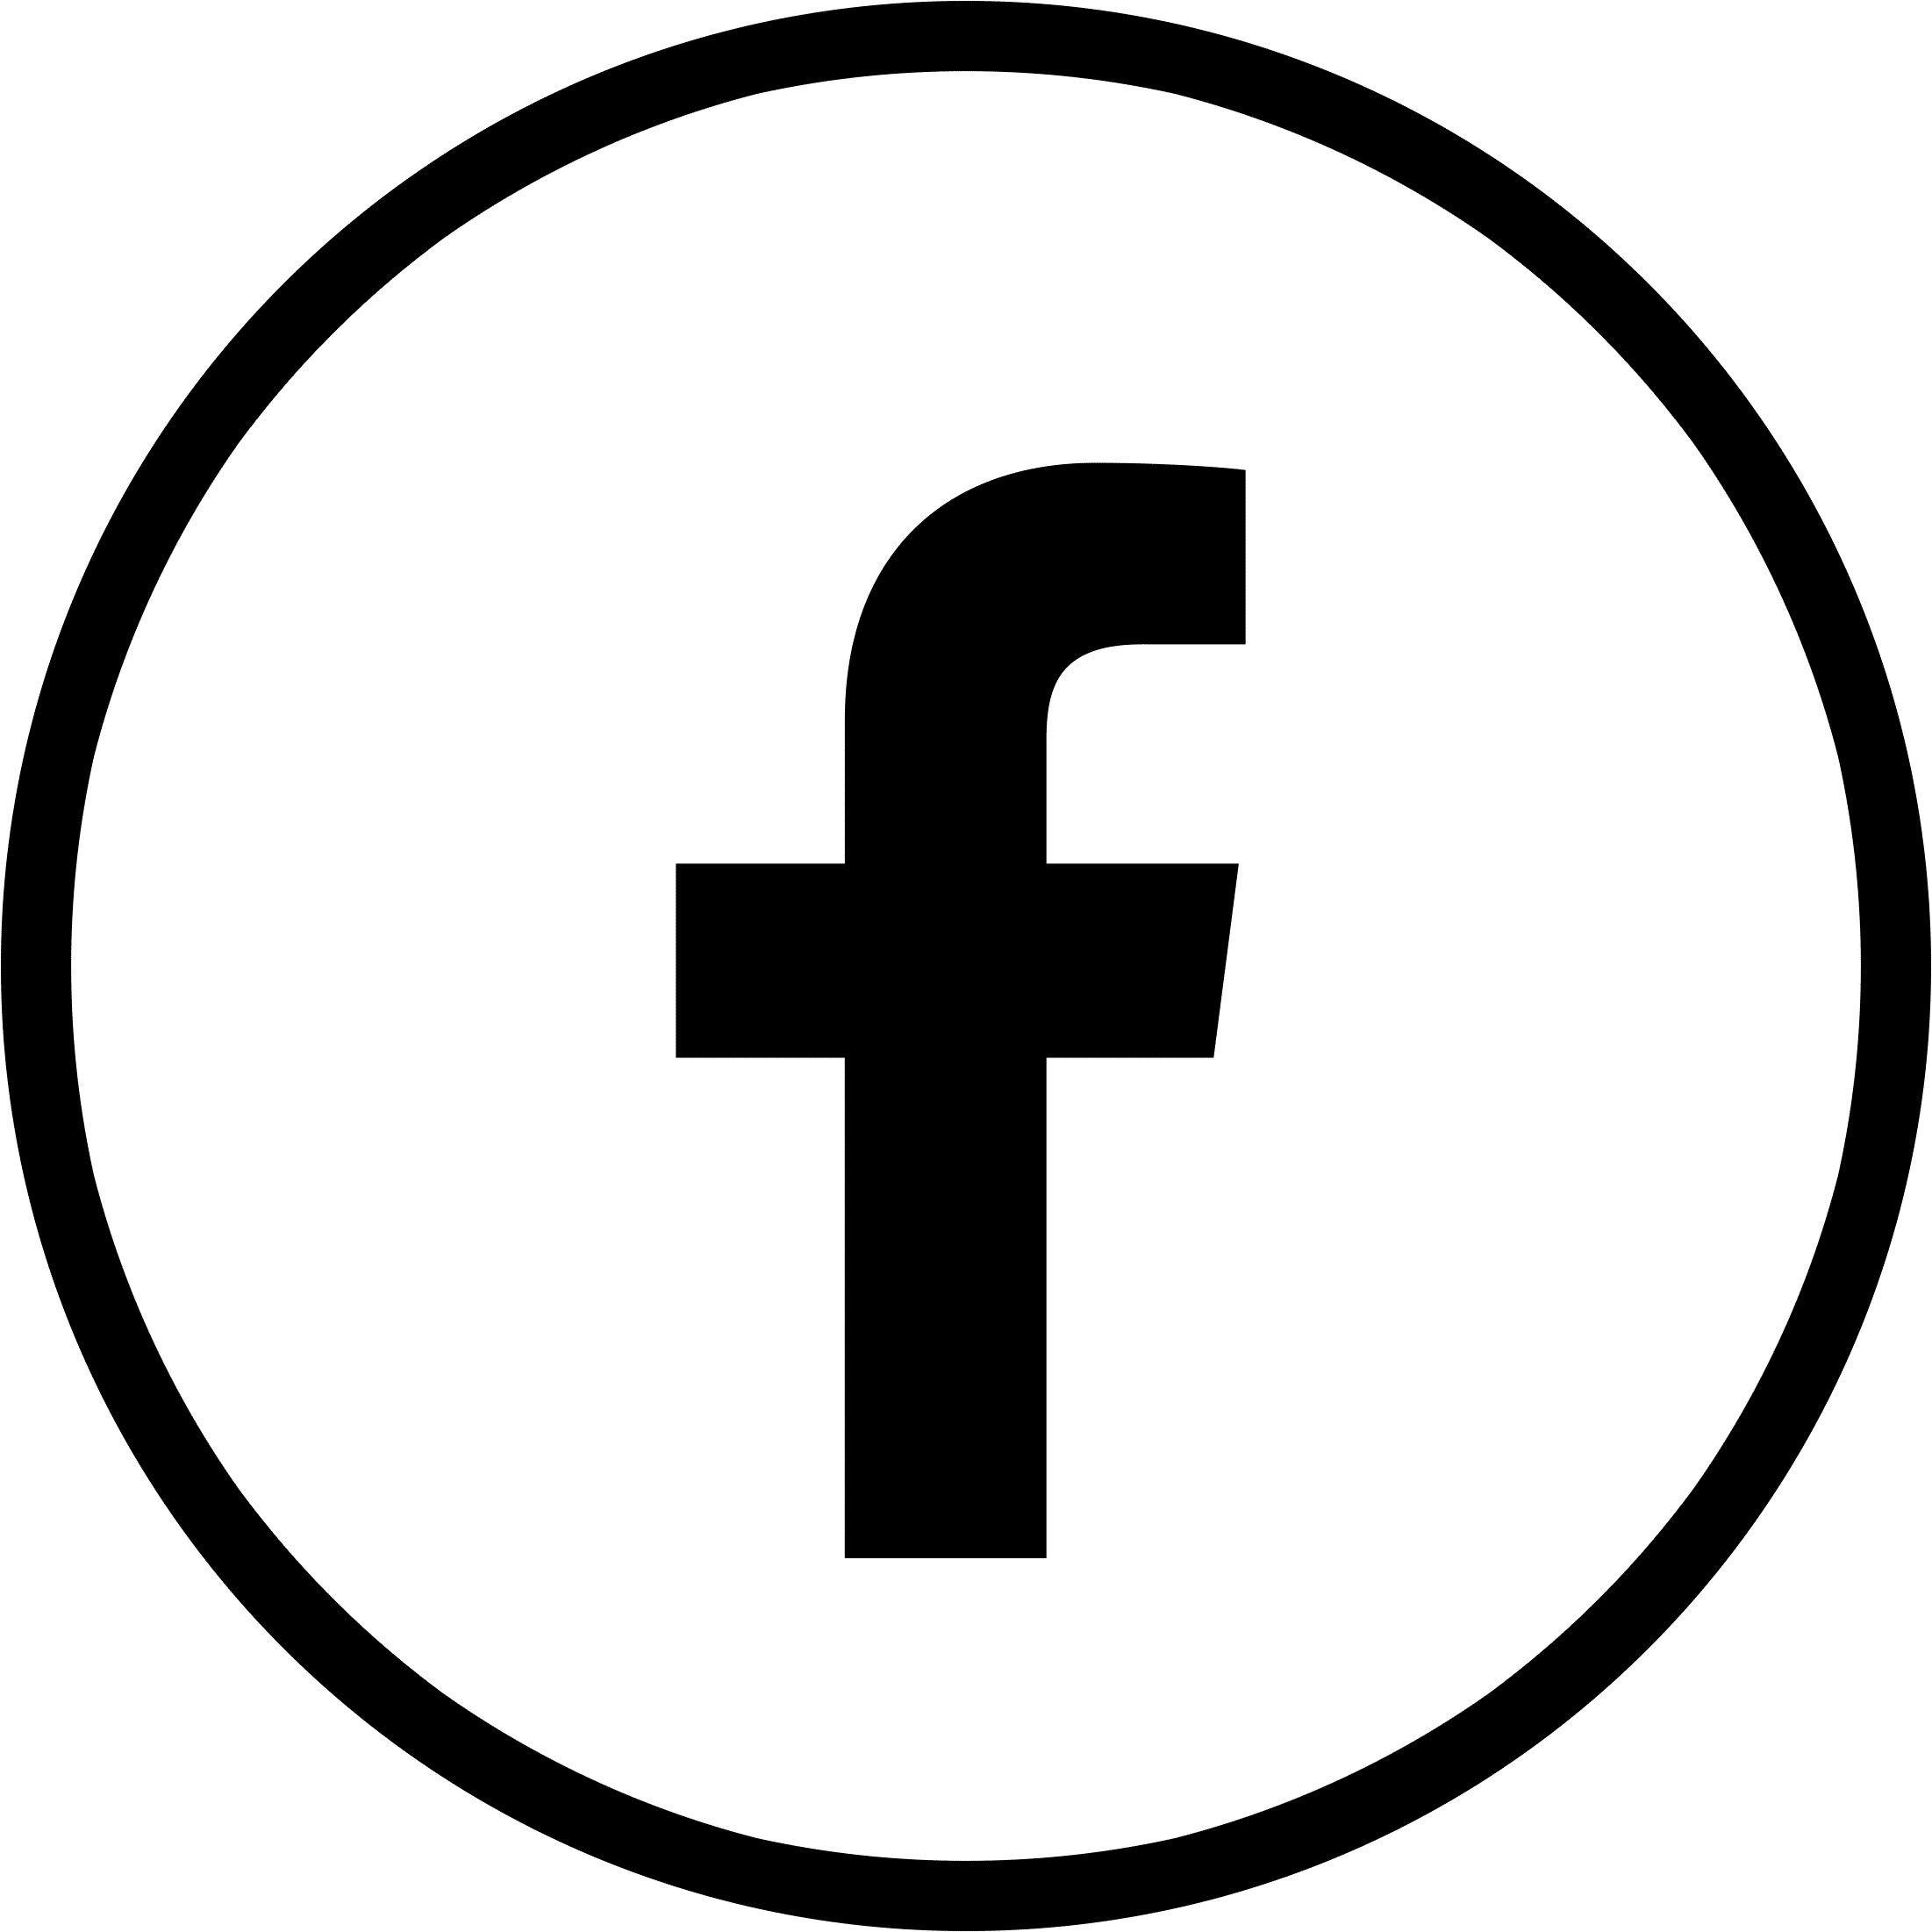 Facebook-logo PNG-Afbeelding